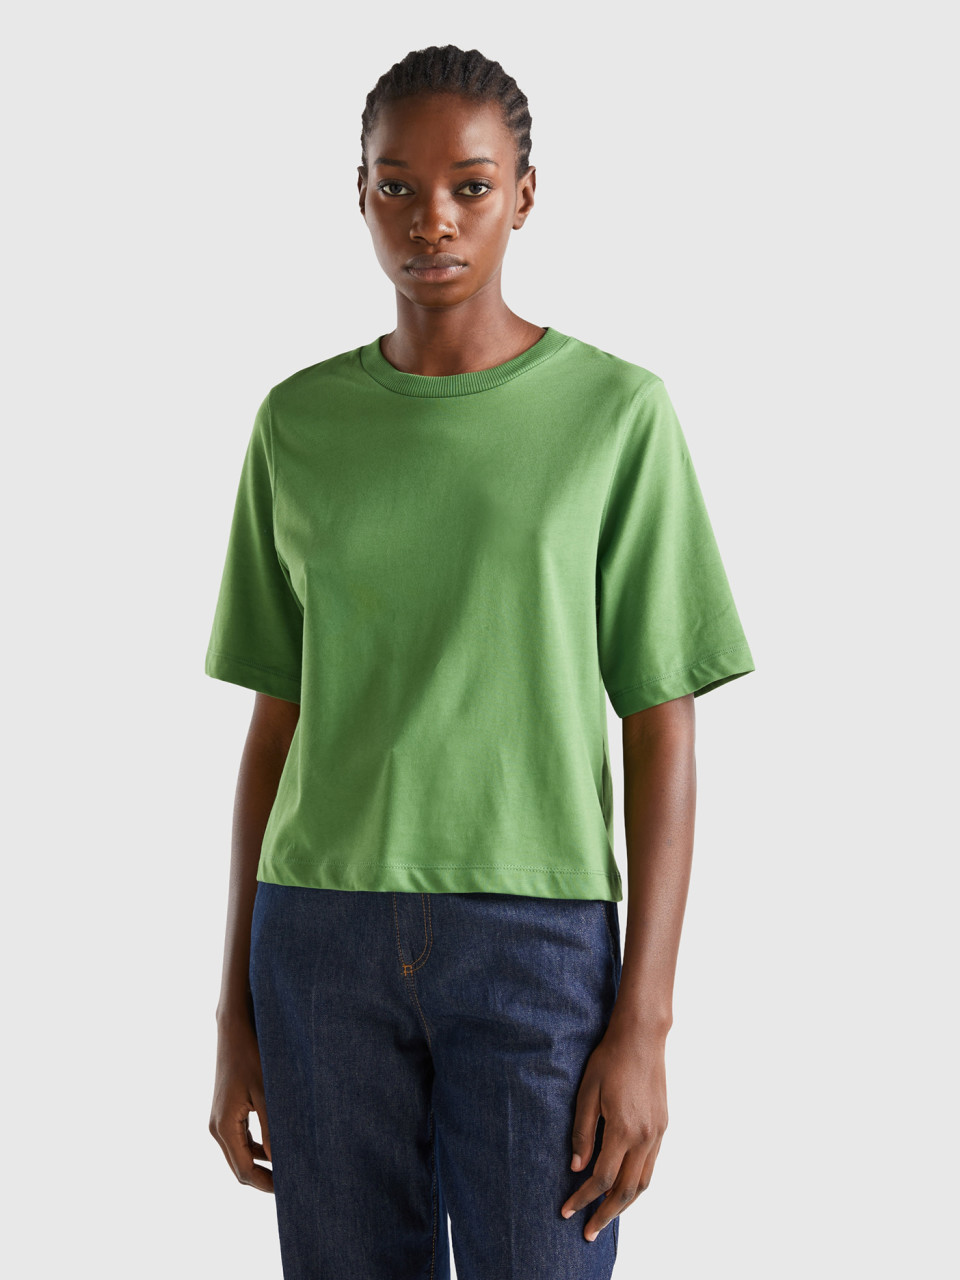 Benetton, 100% Cotton Boxy Fit T-shirt, Military Green, Women